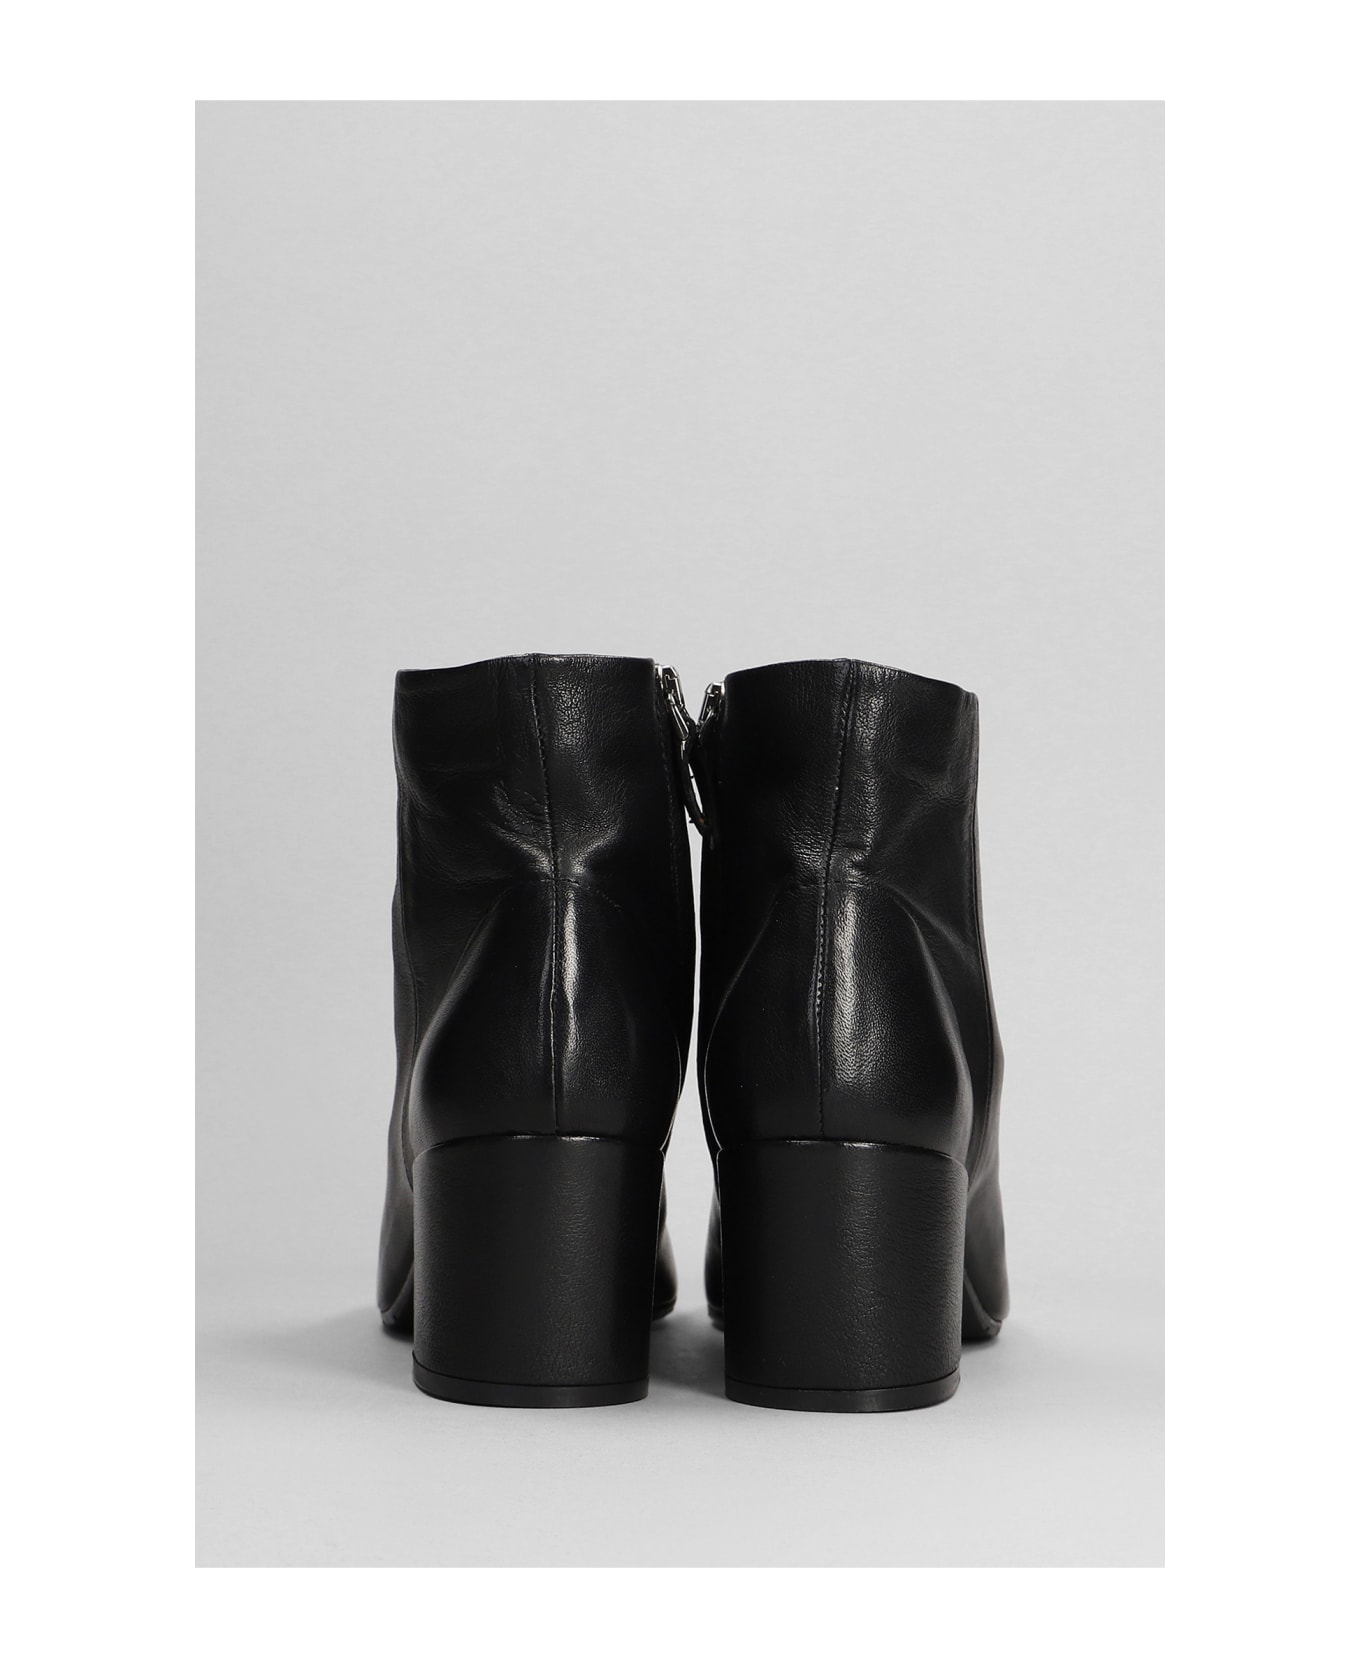 Julie Dee High Heels Ankle Boots In Black Leather - black